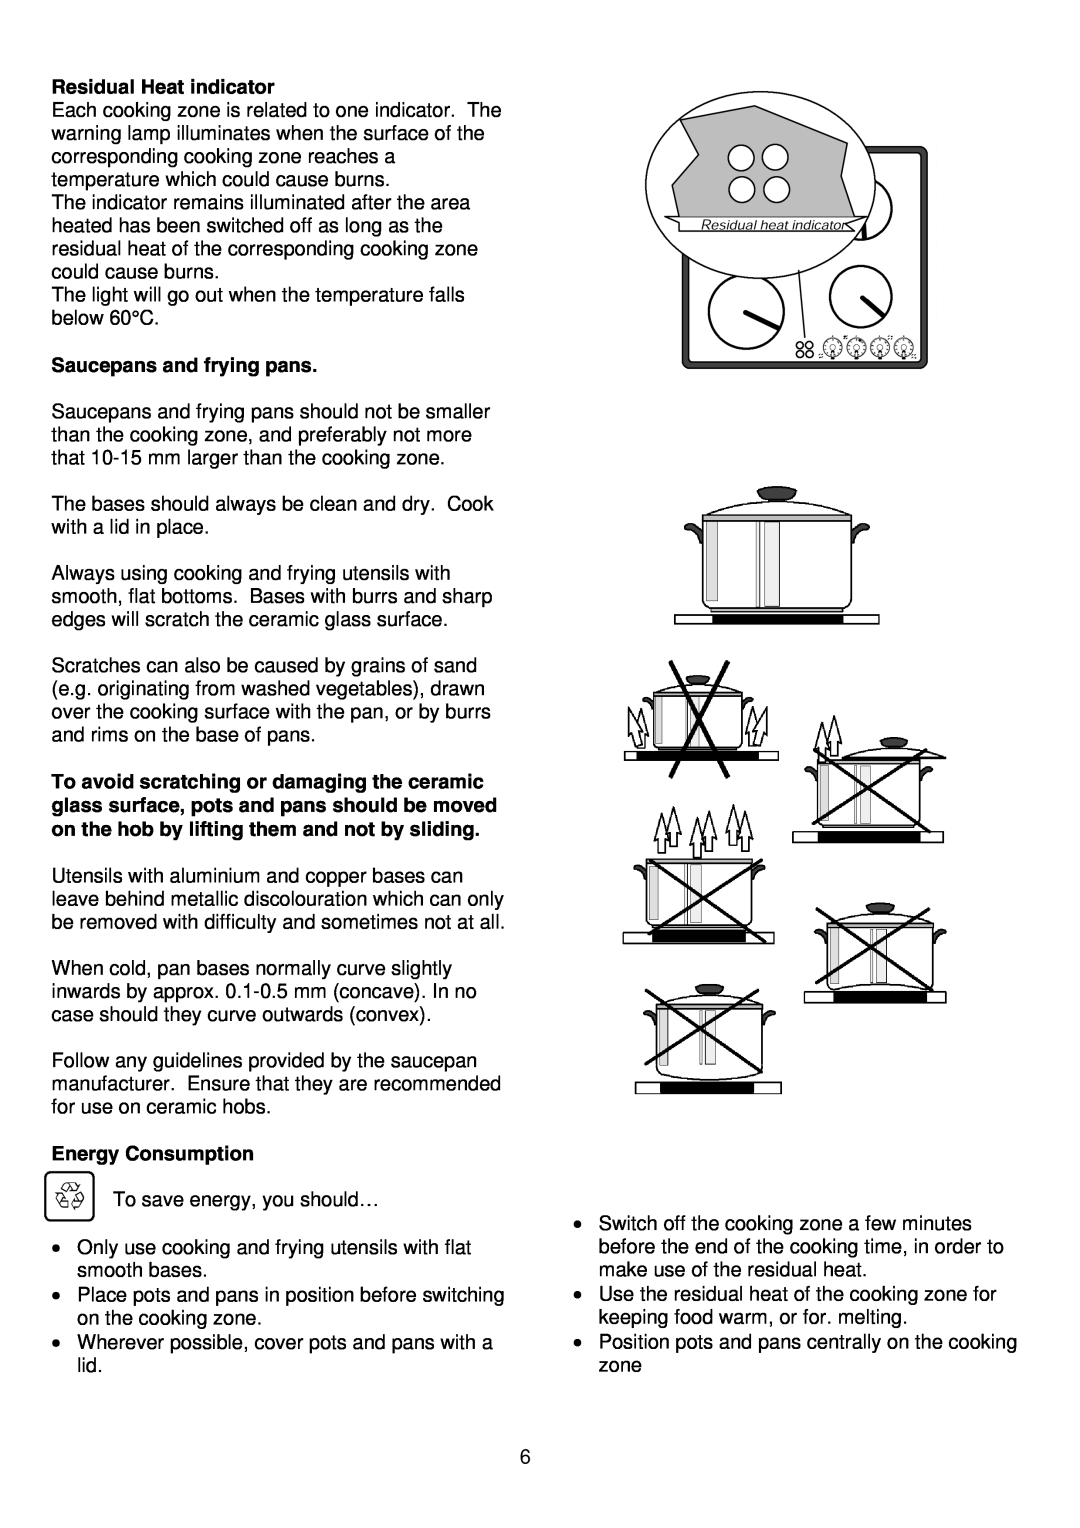 Zanussi ZKF641 installation instructions Residual Heat indicator, Saucepans and frying pans, Energy Consumption 